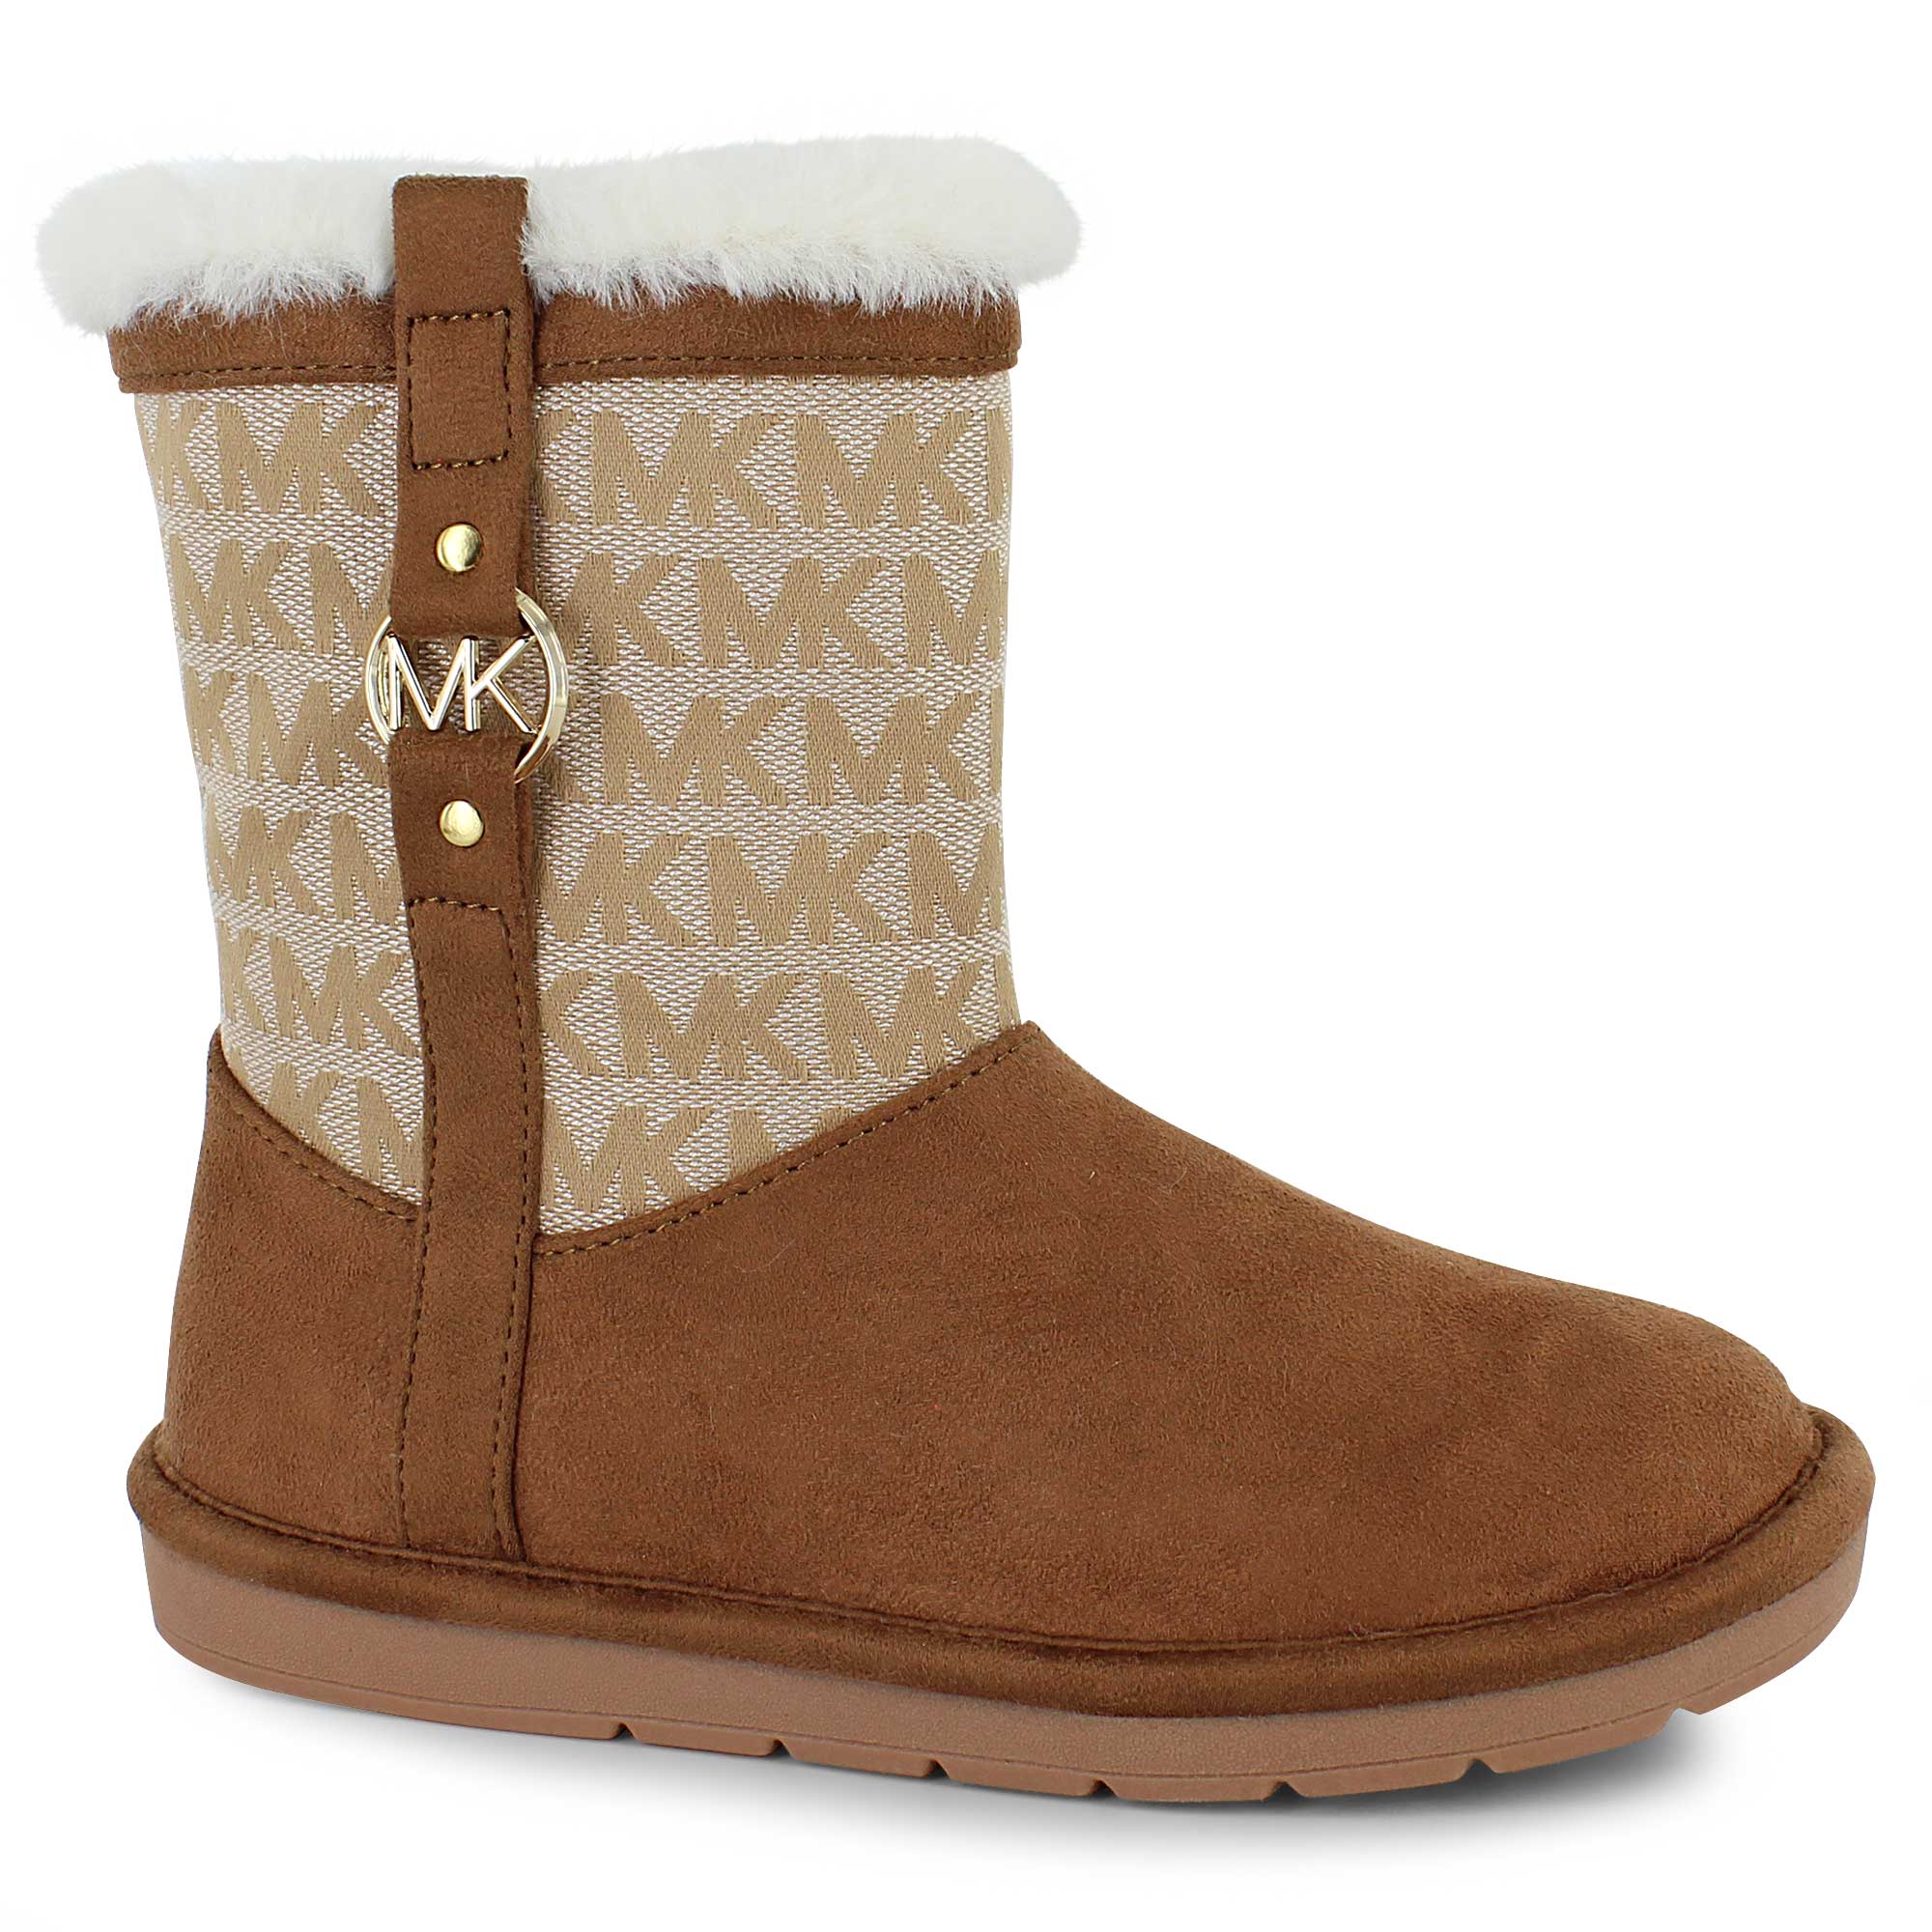 NEW Michael Kors Yancy Girl Toddler Brown MK Logo Boots Booties Size 5